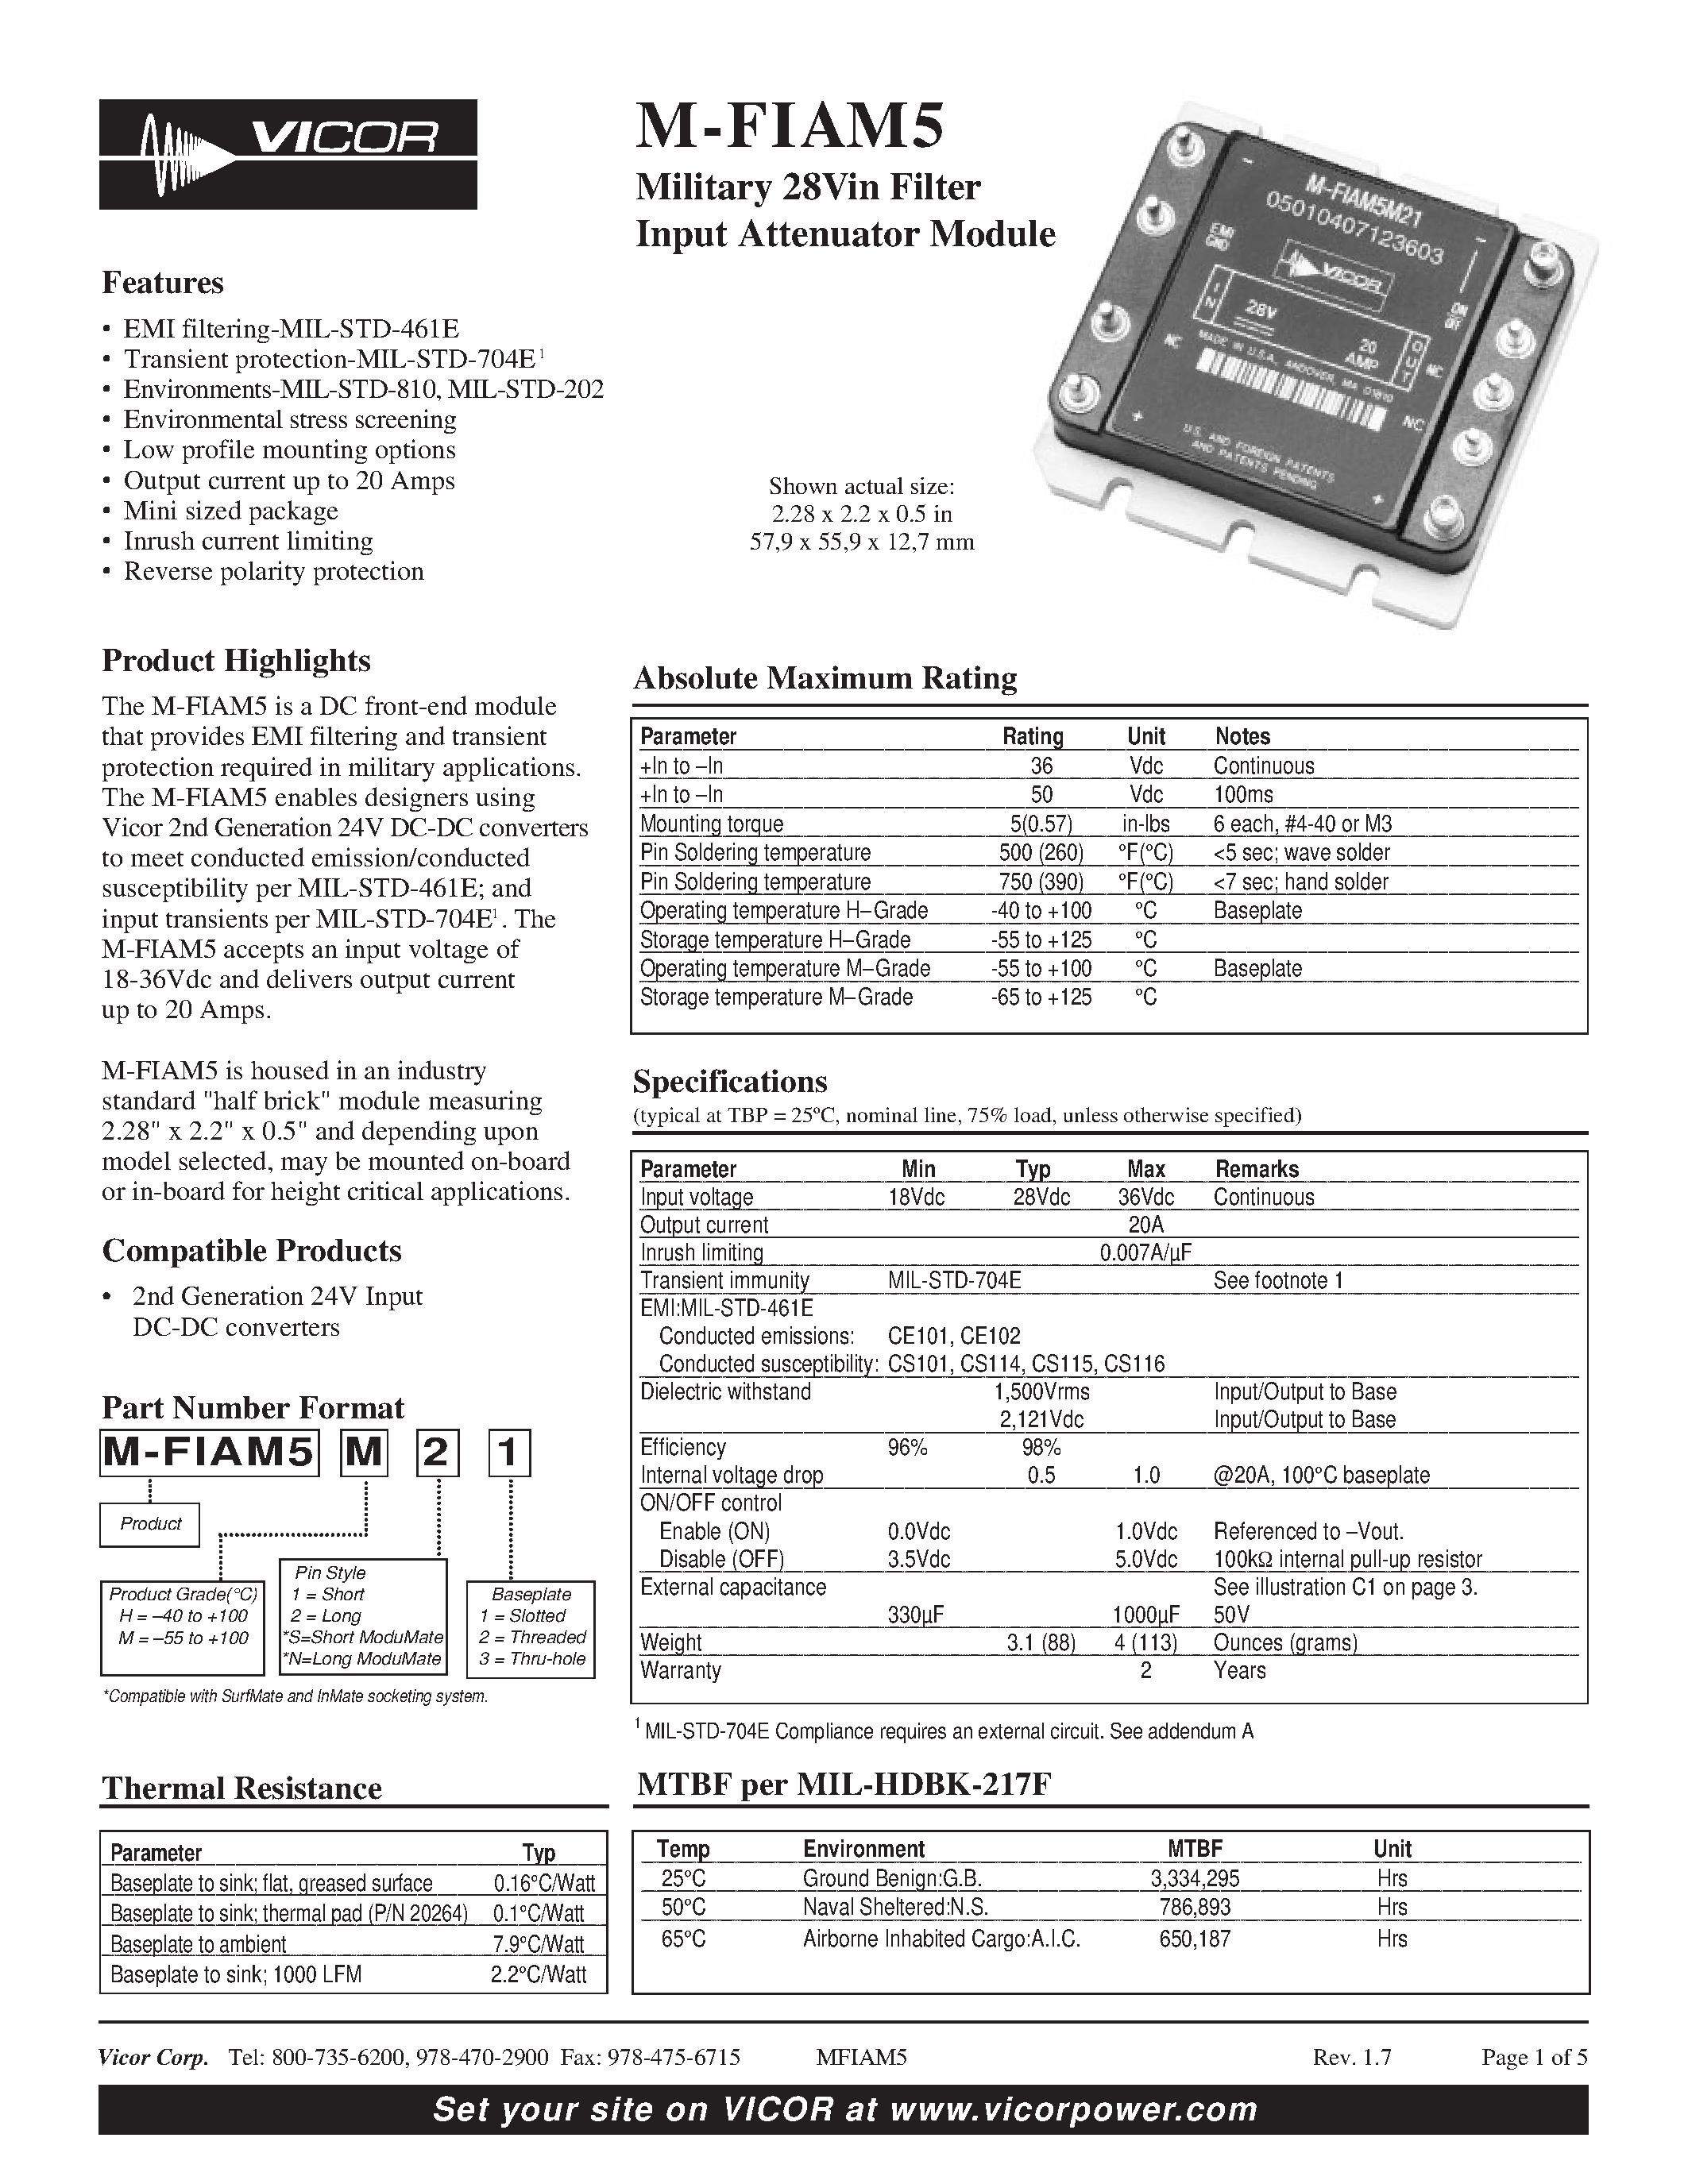 Datasheet M-FIAM5M12 - Military 28Vin Filter Input Attenuator Module page 1